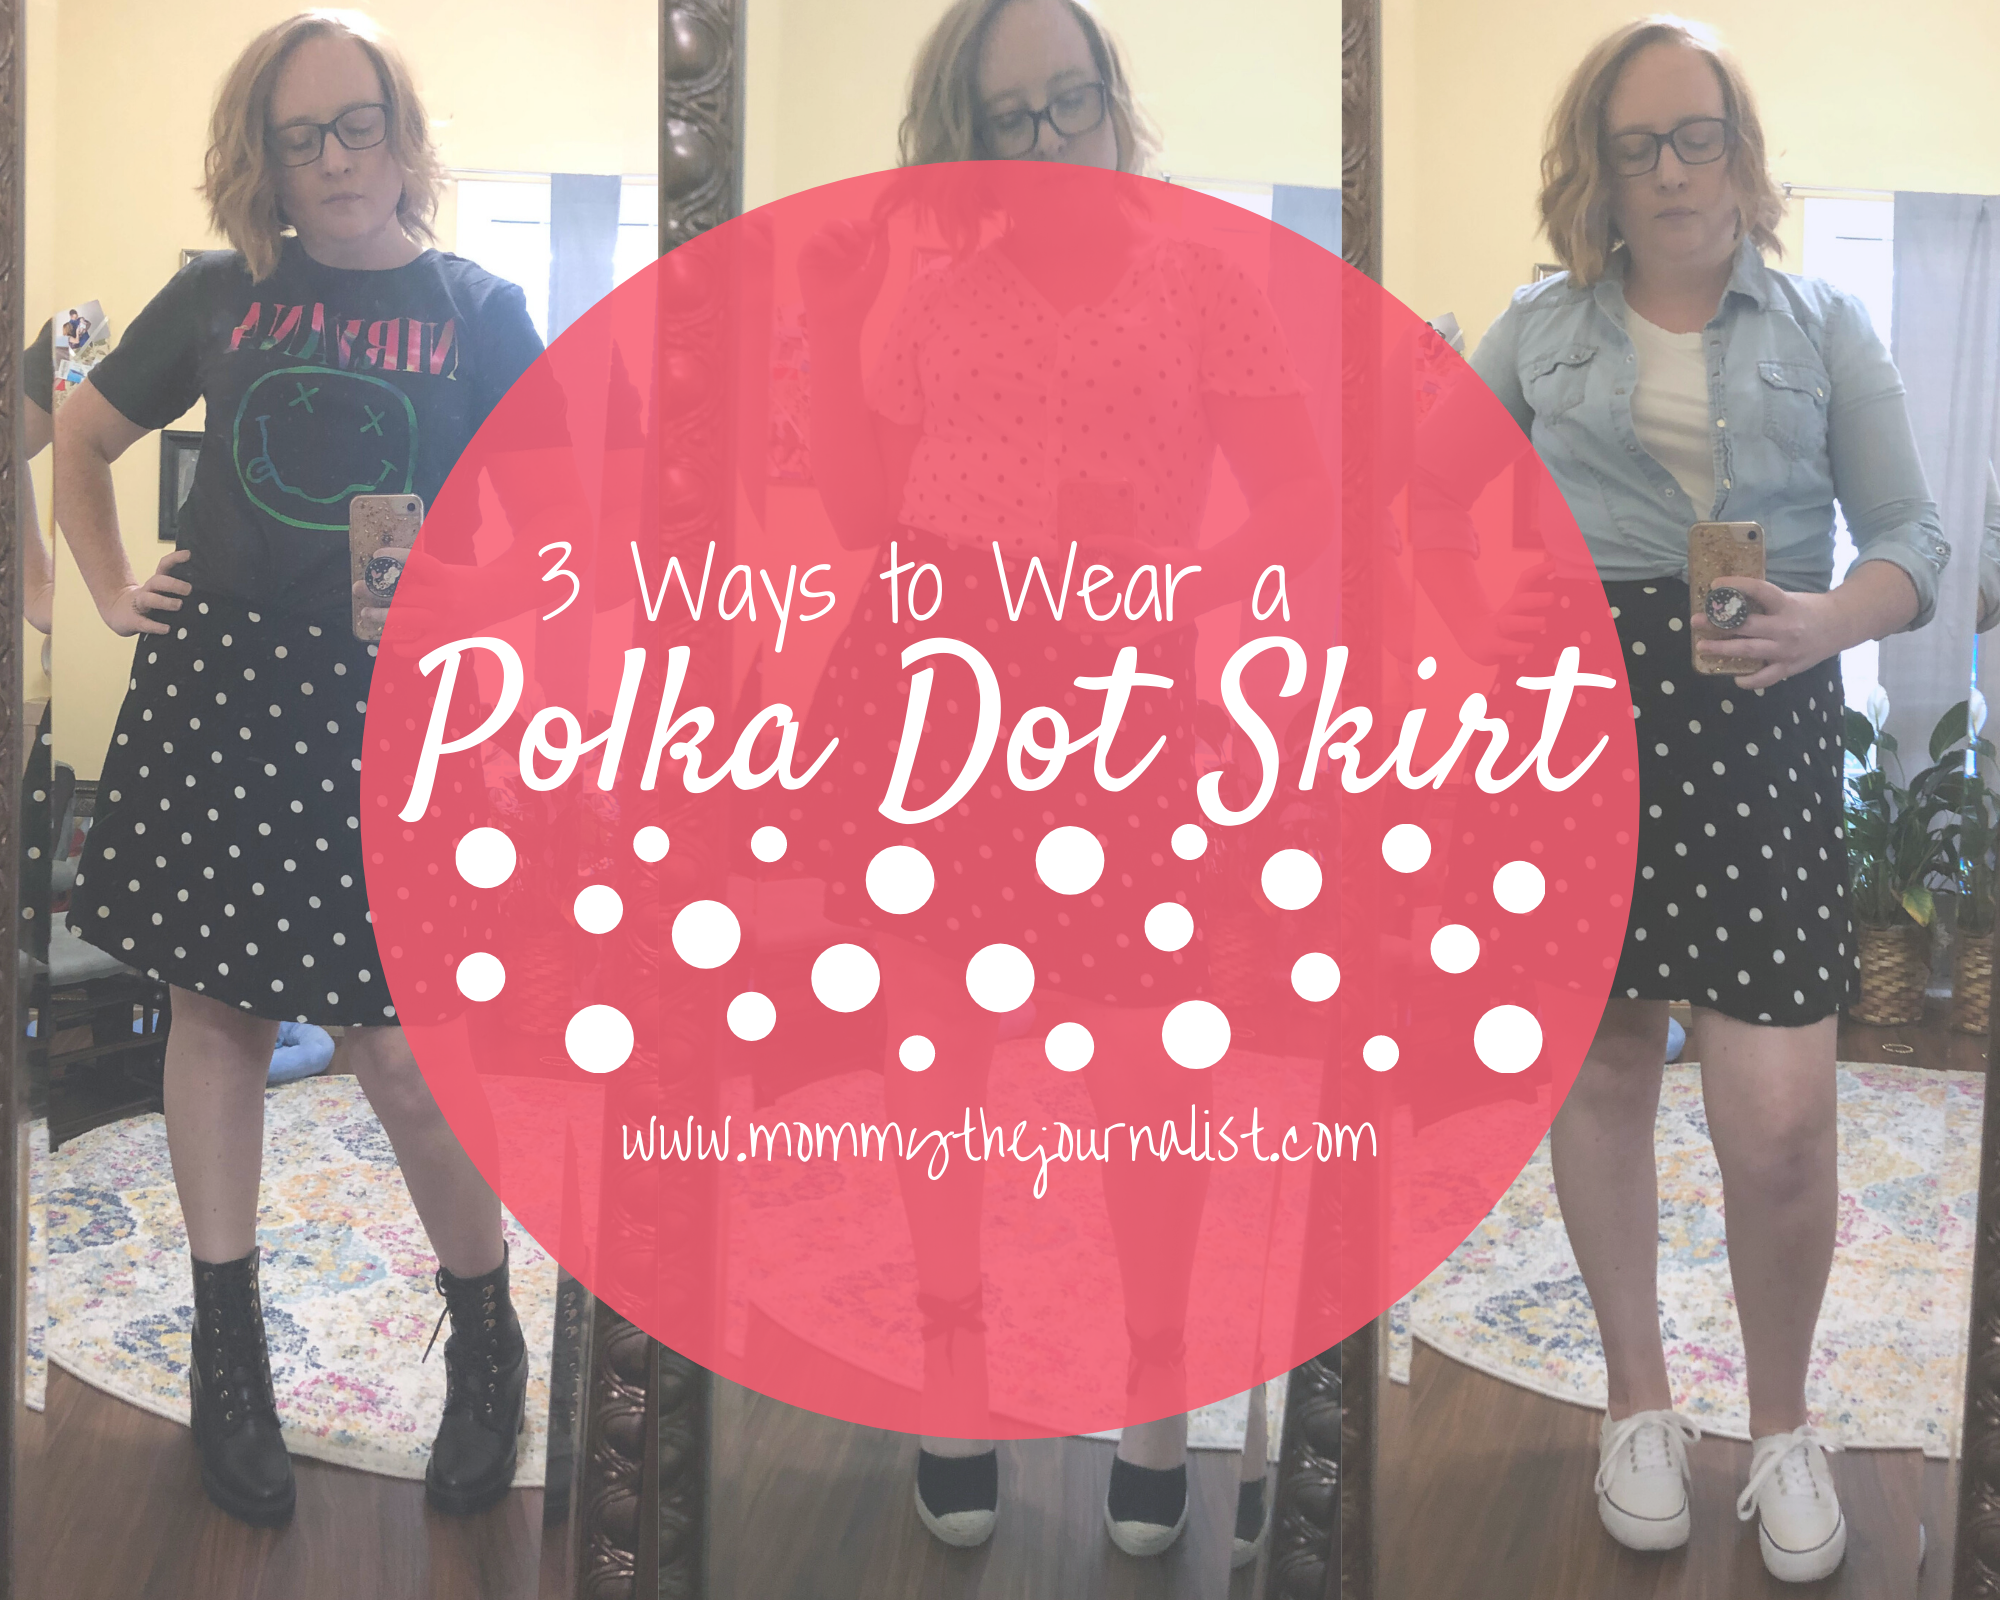 Polka Dot Skirt Outfit Ideas